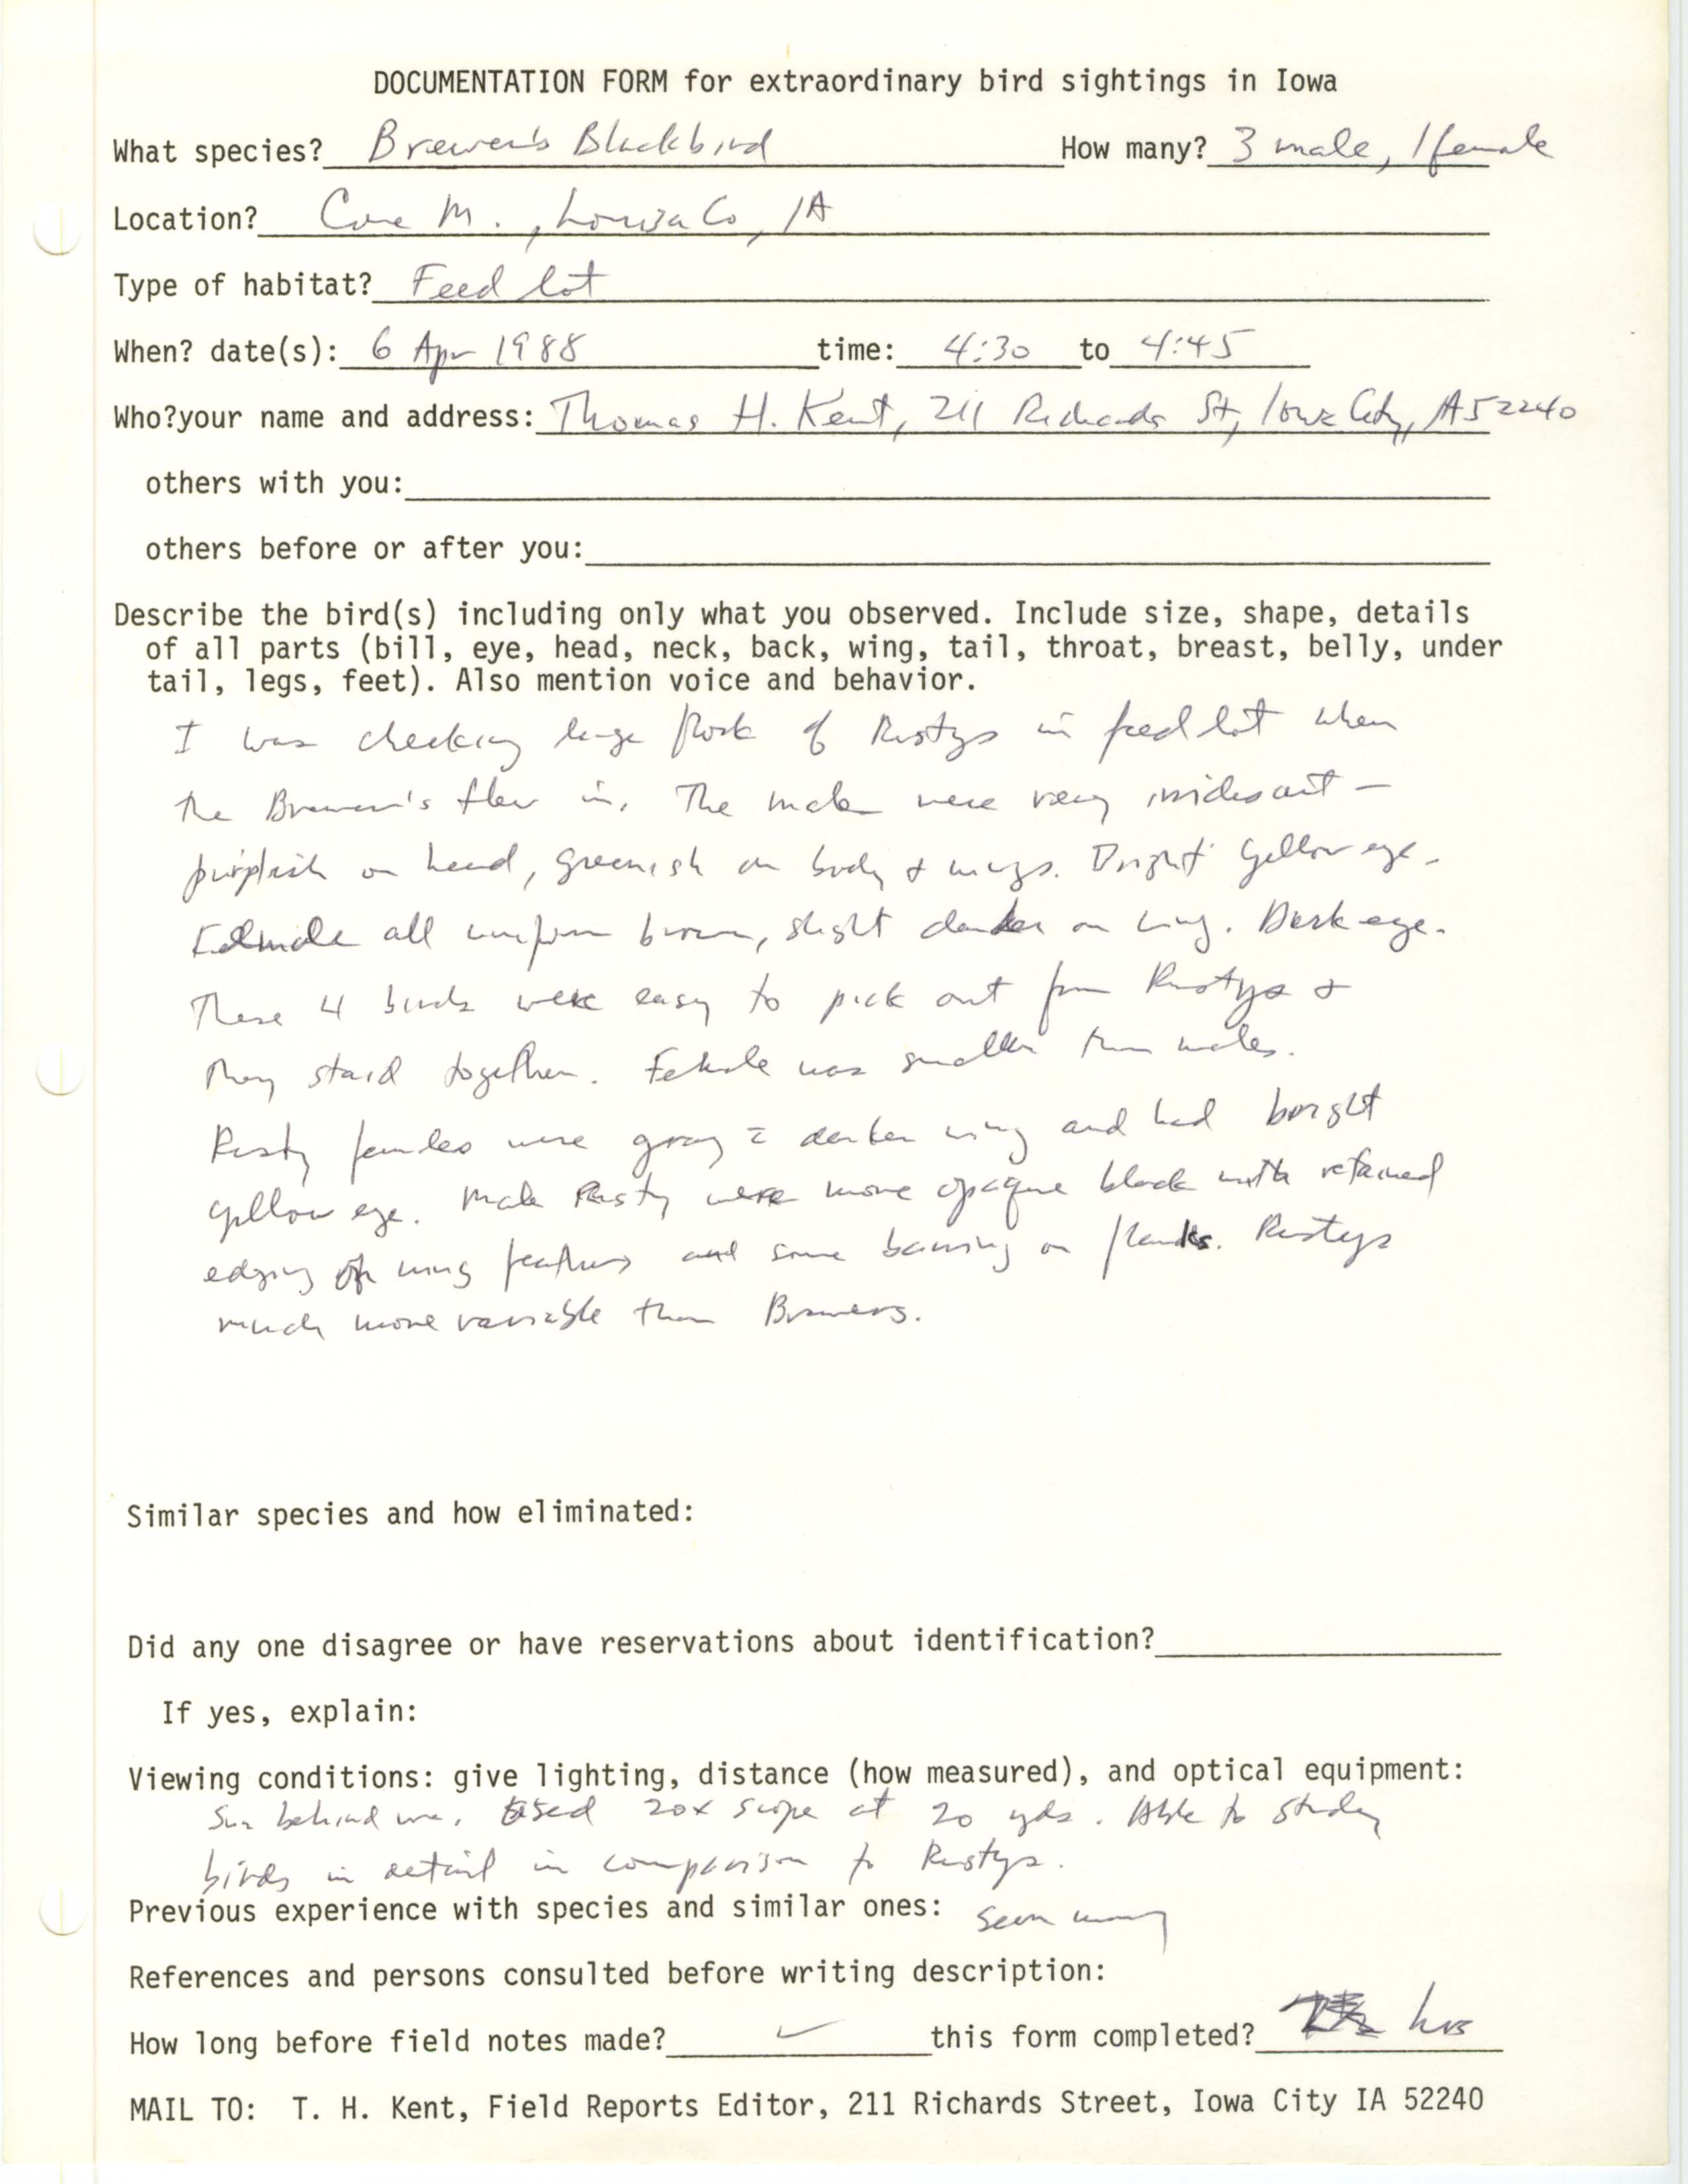 Rare bird documentation form for Brewer's Blackbird at Cone Marsh, 1988